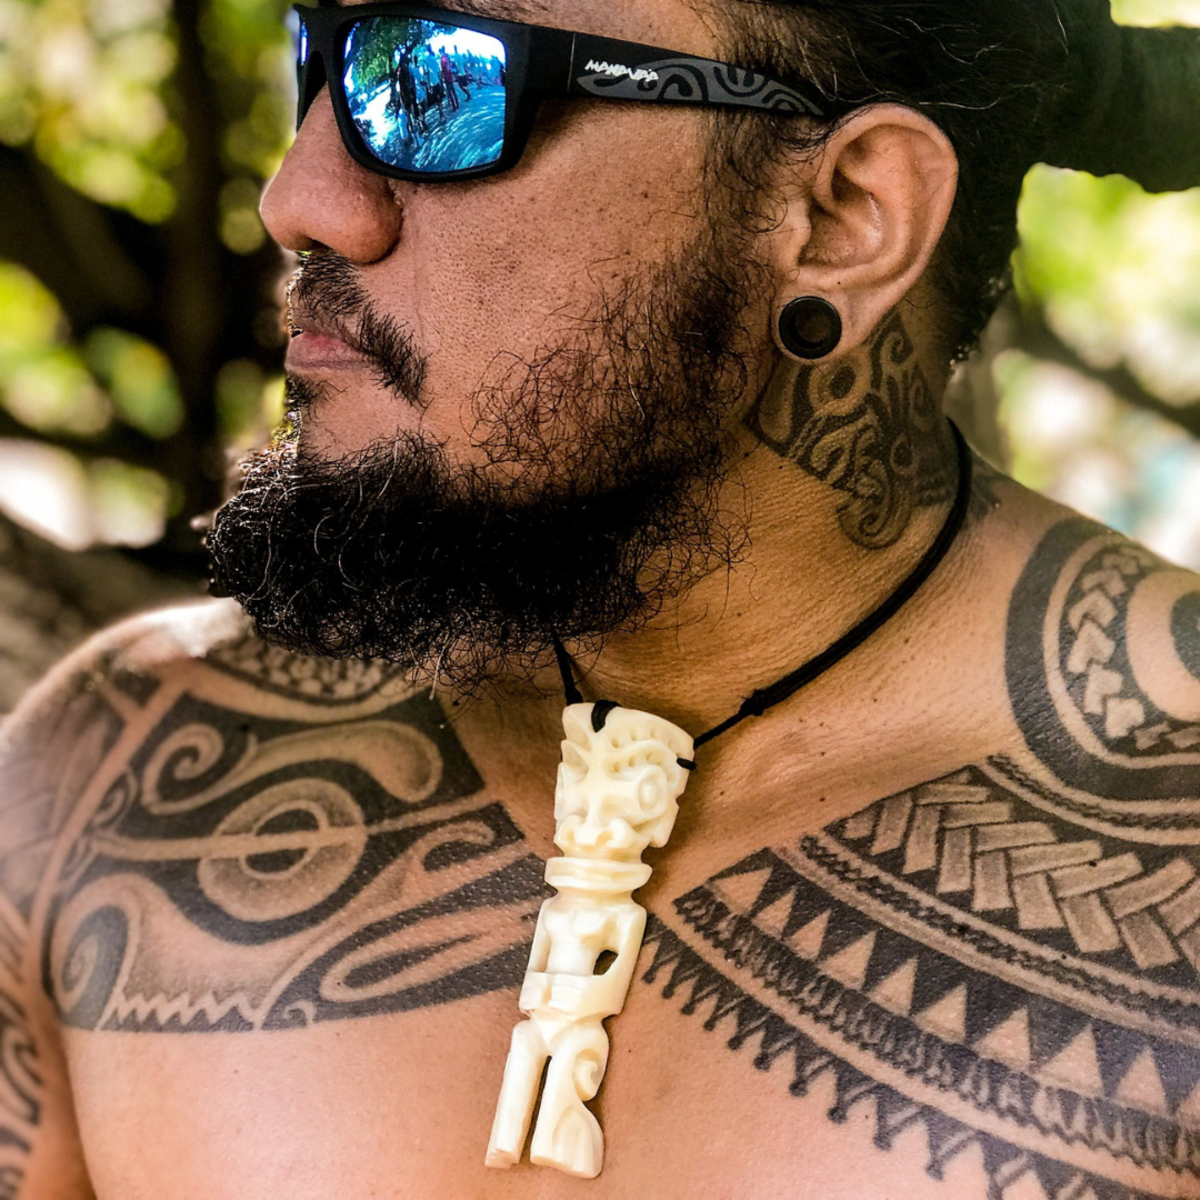 Tribal-tattoo-designs-ideas-for-men